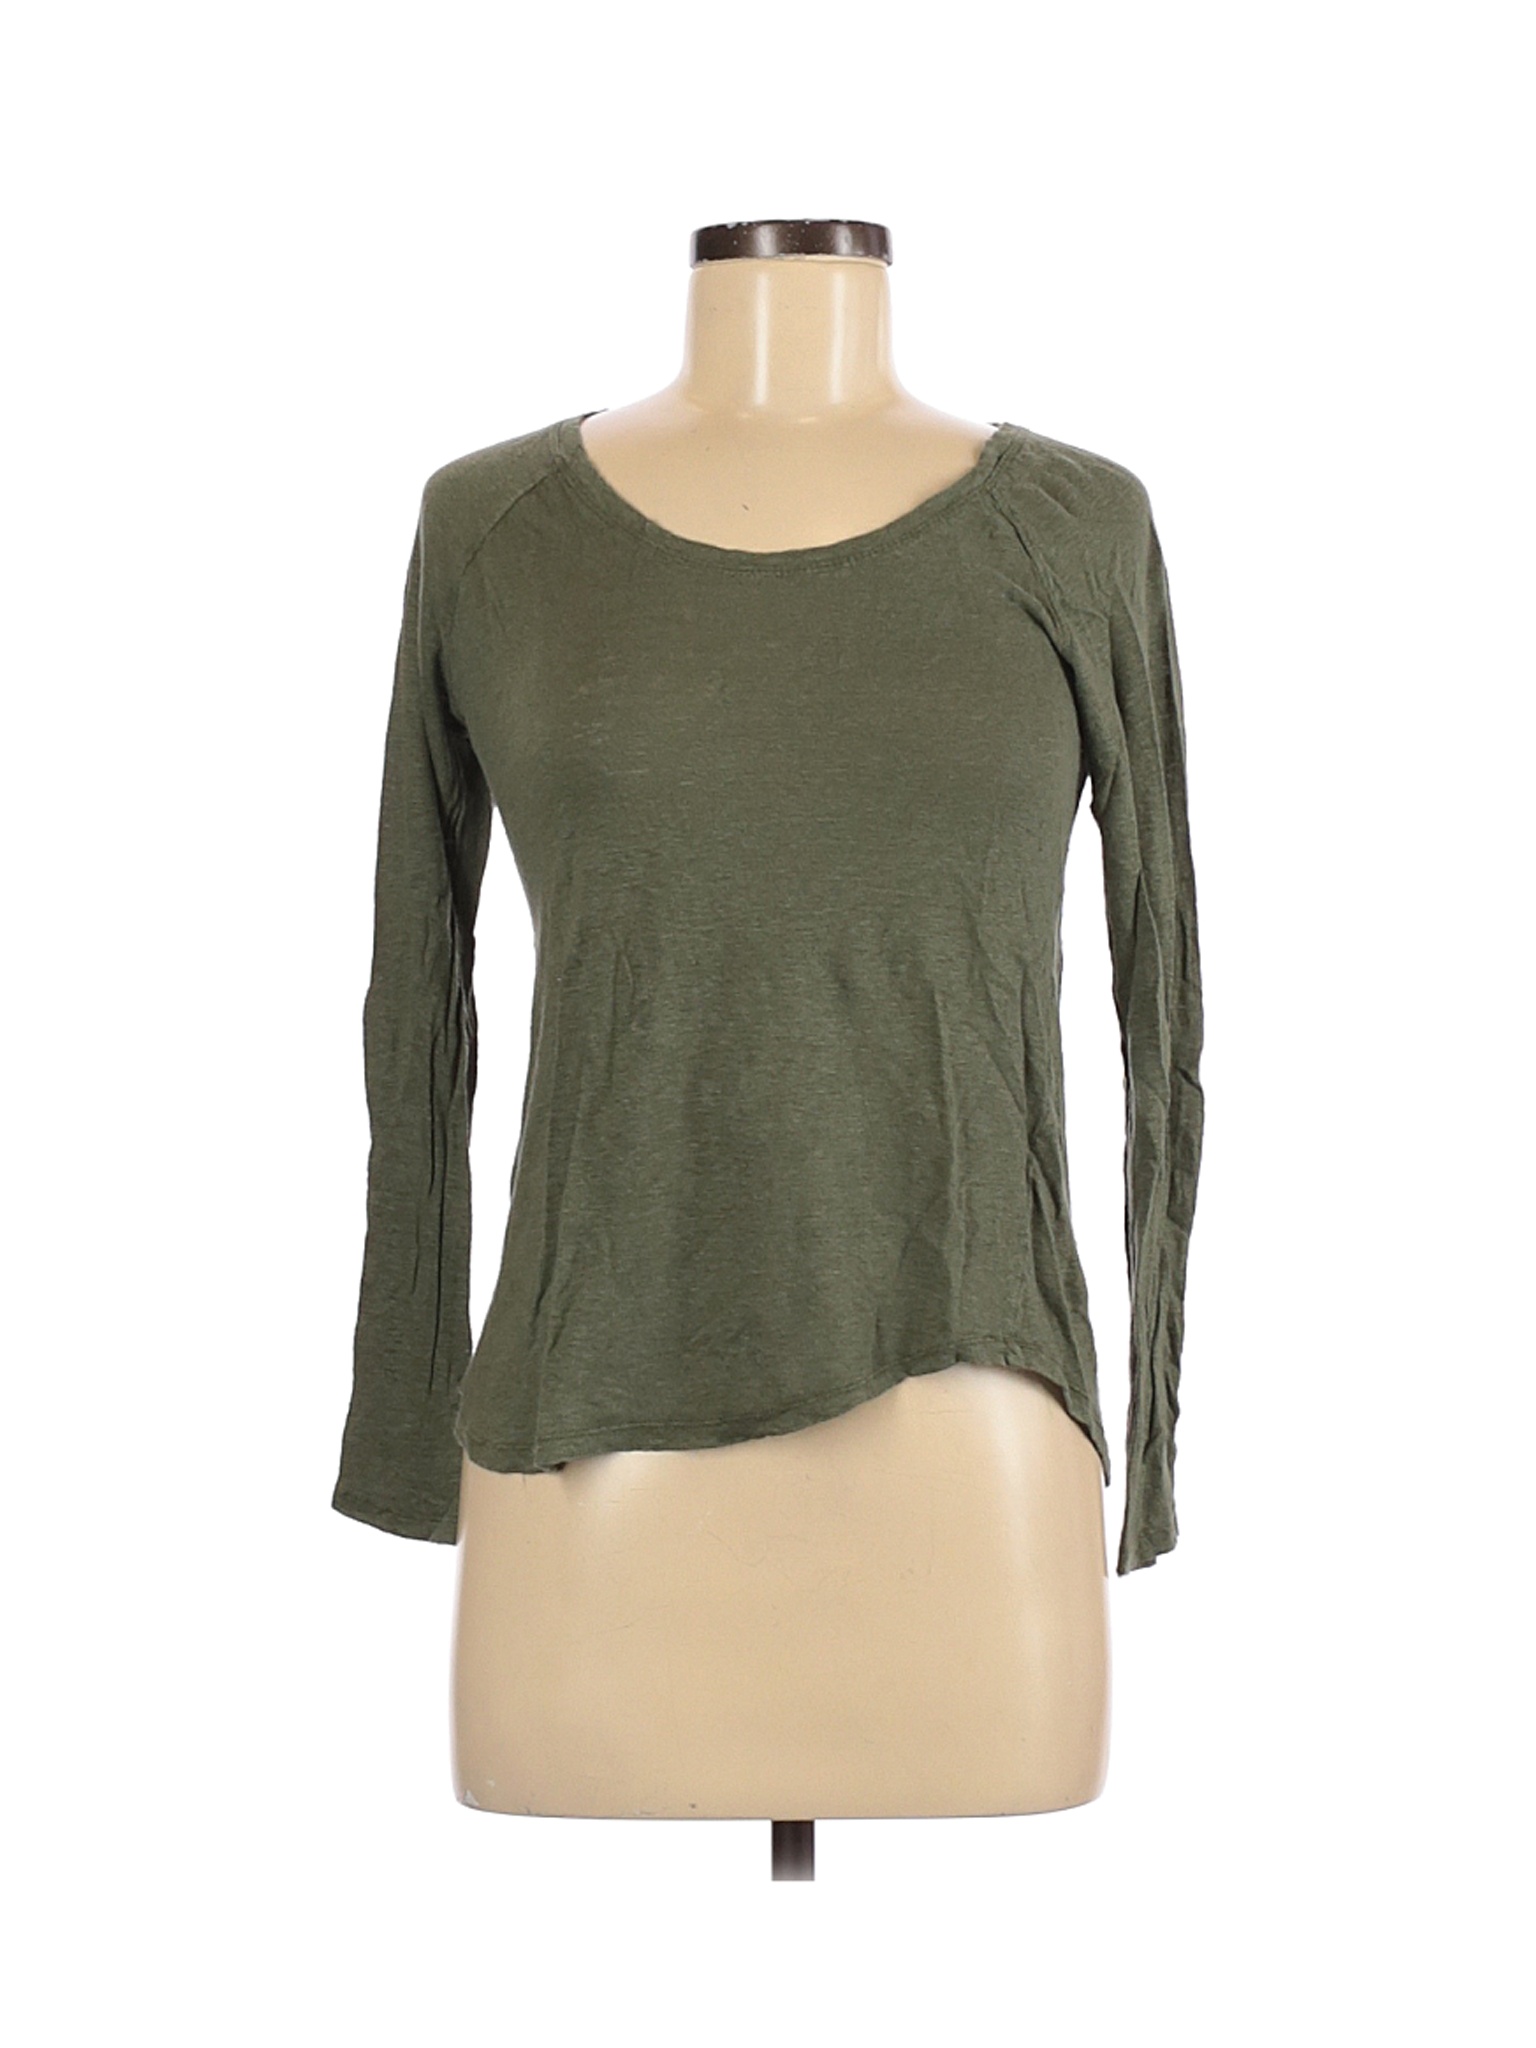 Cynthia Rowley TJX Women Green Long Sleeve T-Shirt M | eBay